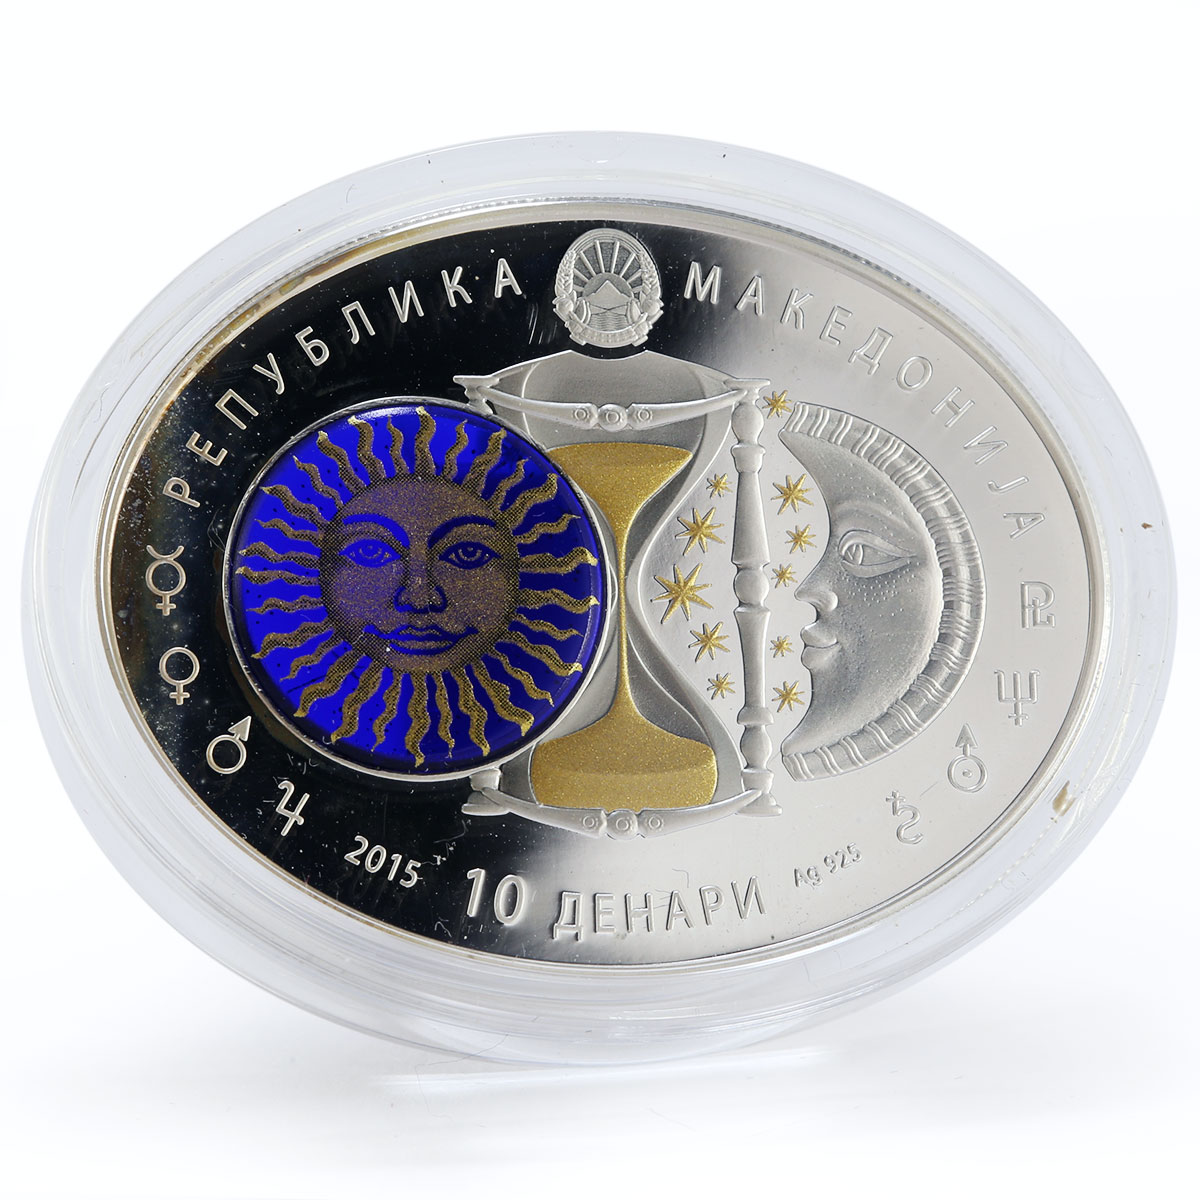 Macedonia 10 denari Zodiac Taurus 3D printing Gilded Silver Oval Coin 2015